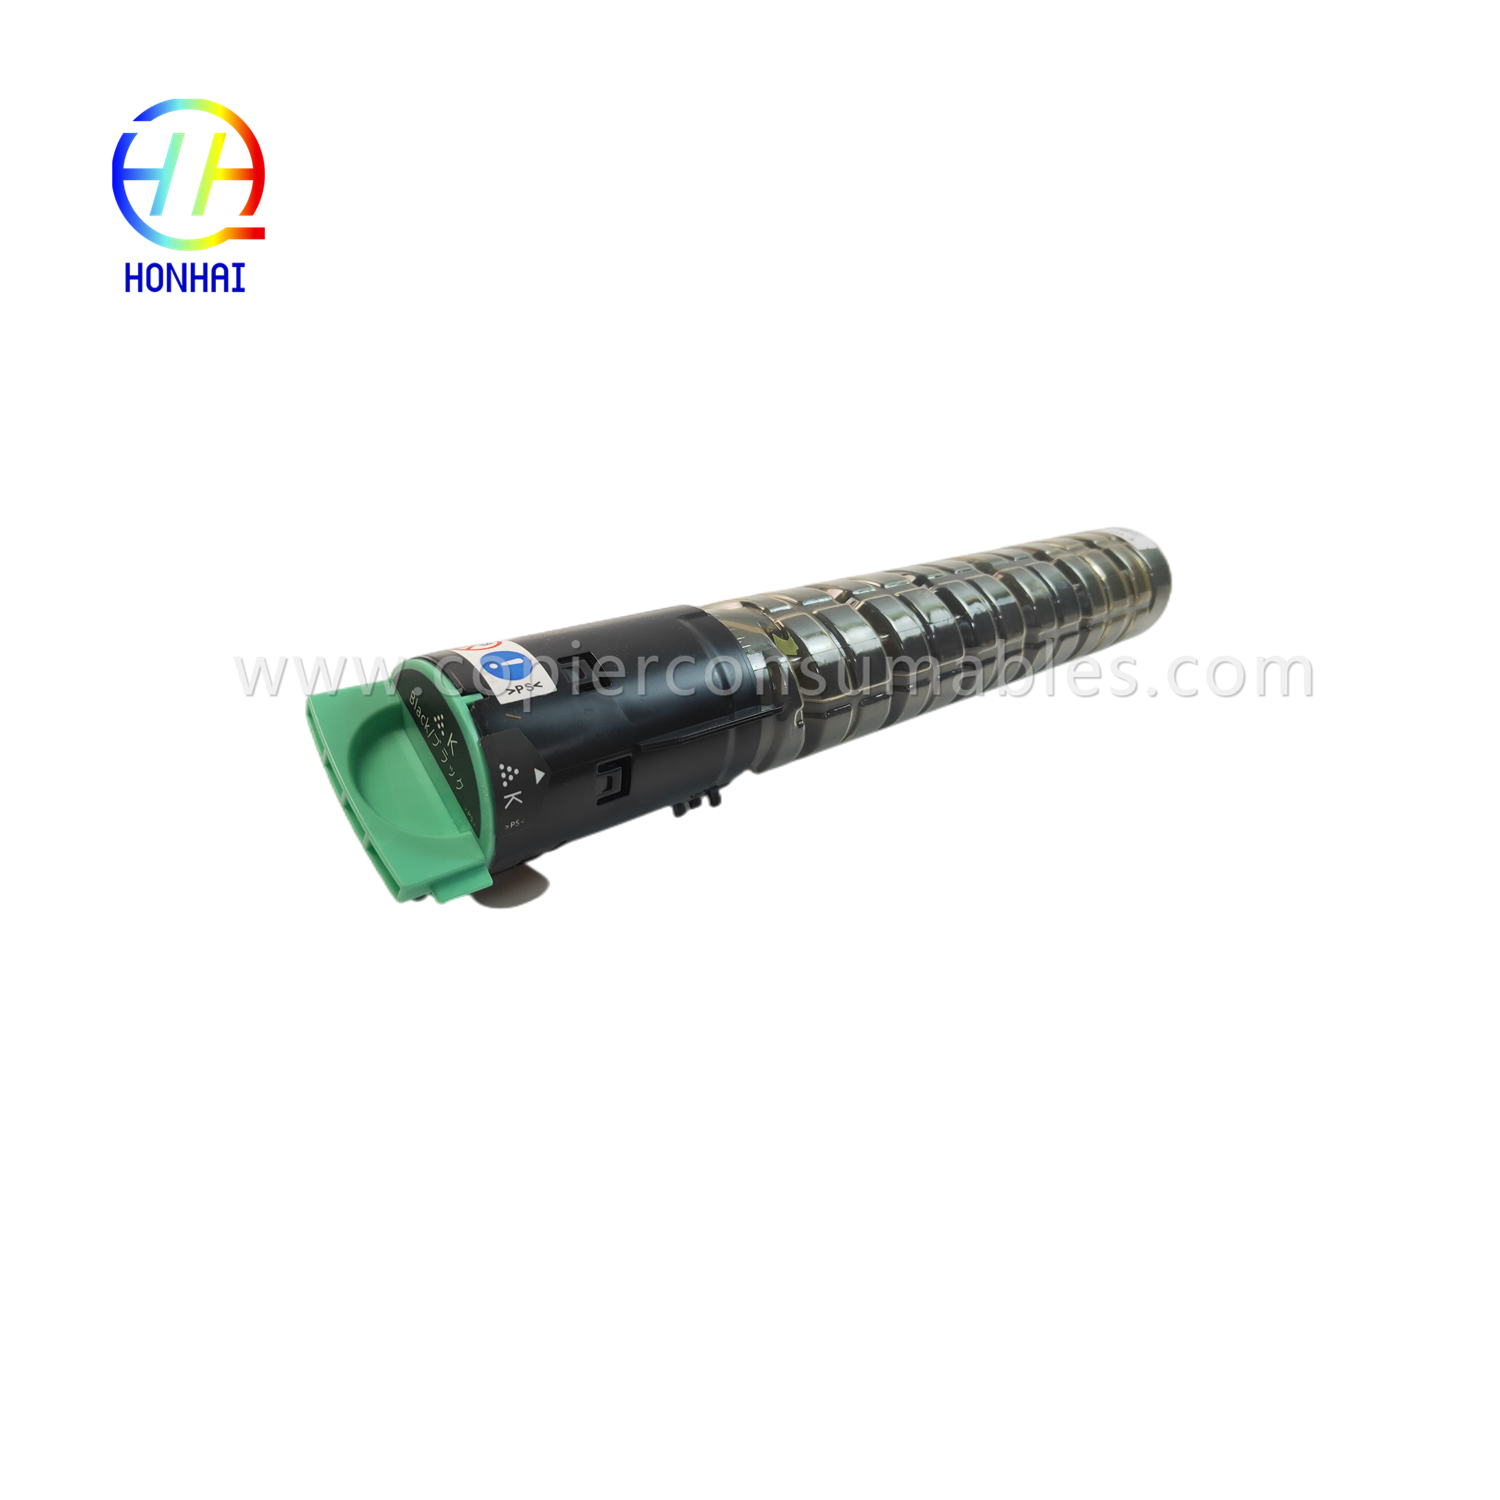 https://c585.goodao.net/toner-cartridge-for-ricoh-aficio-mpc2030-2050-2550-2530-842057-841502-841503-product/